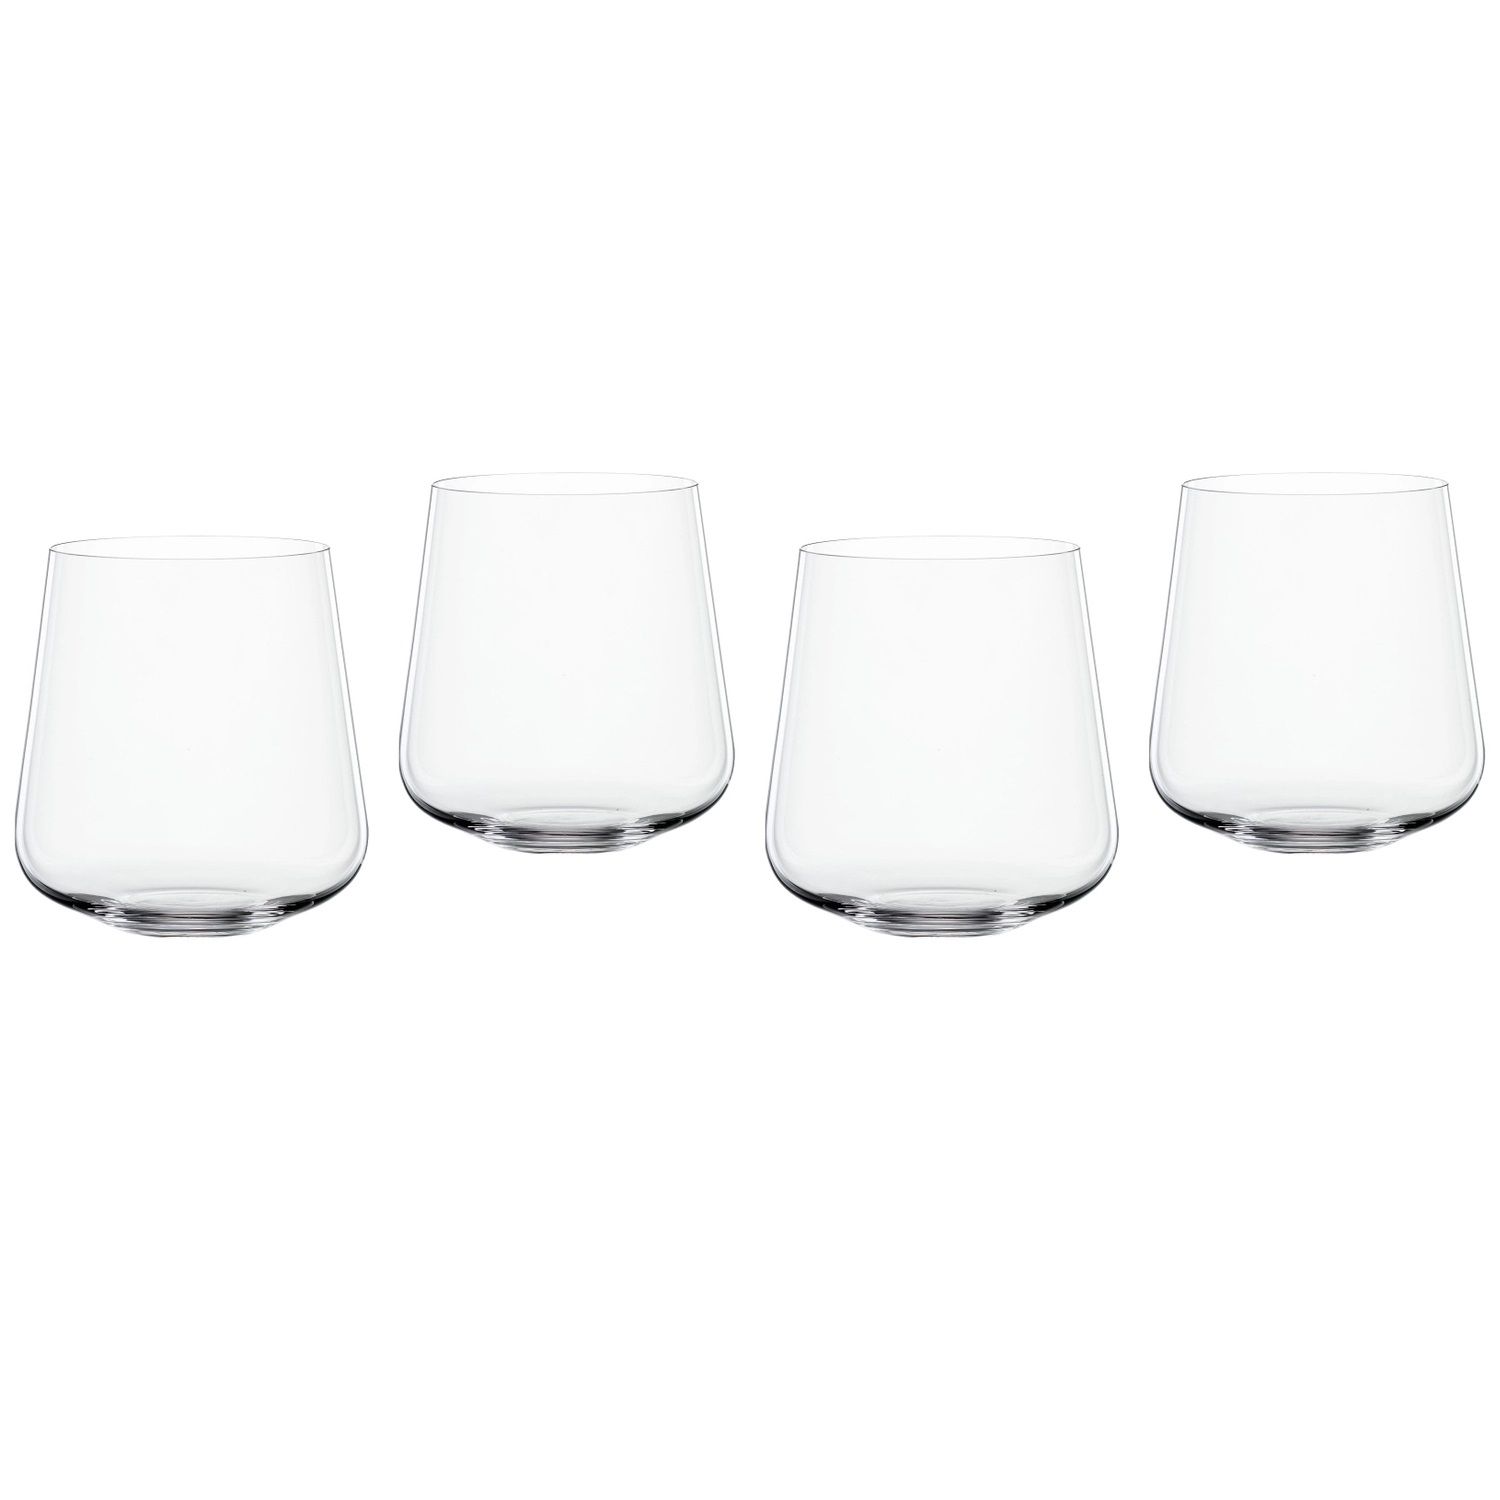 4 бокала для воды Spiegelau Definition Water Glass 430 мл (арт. 1350175)